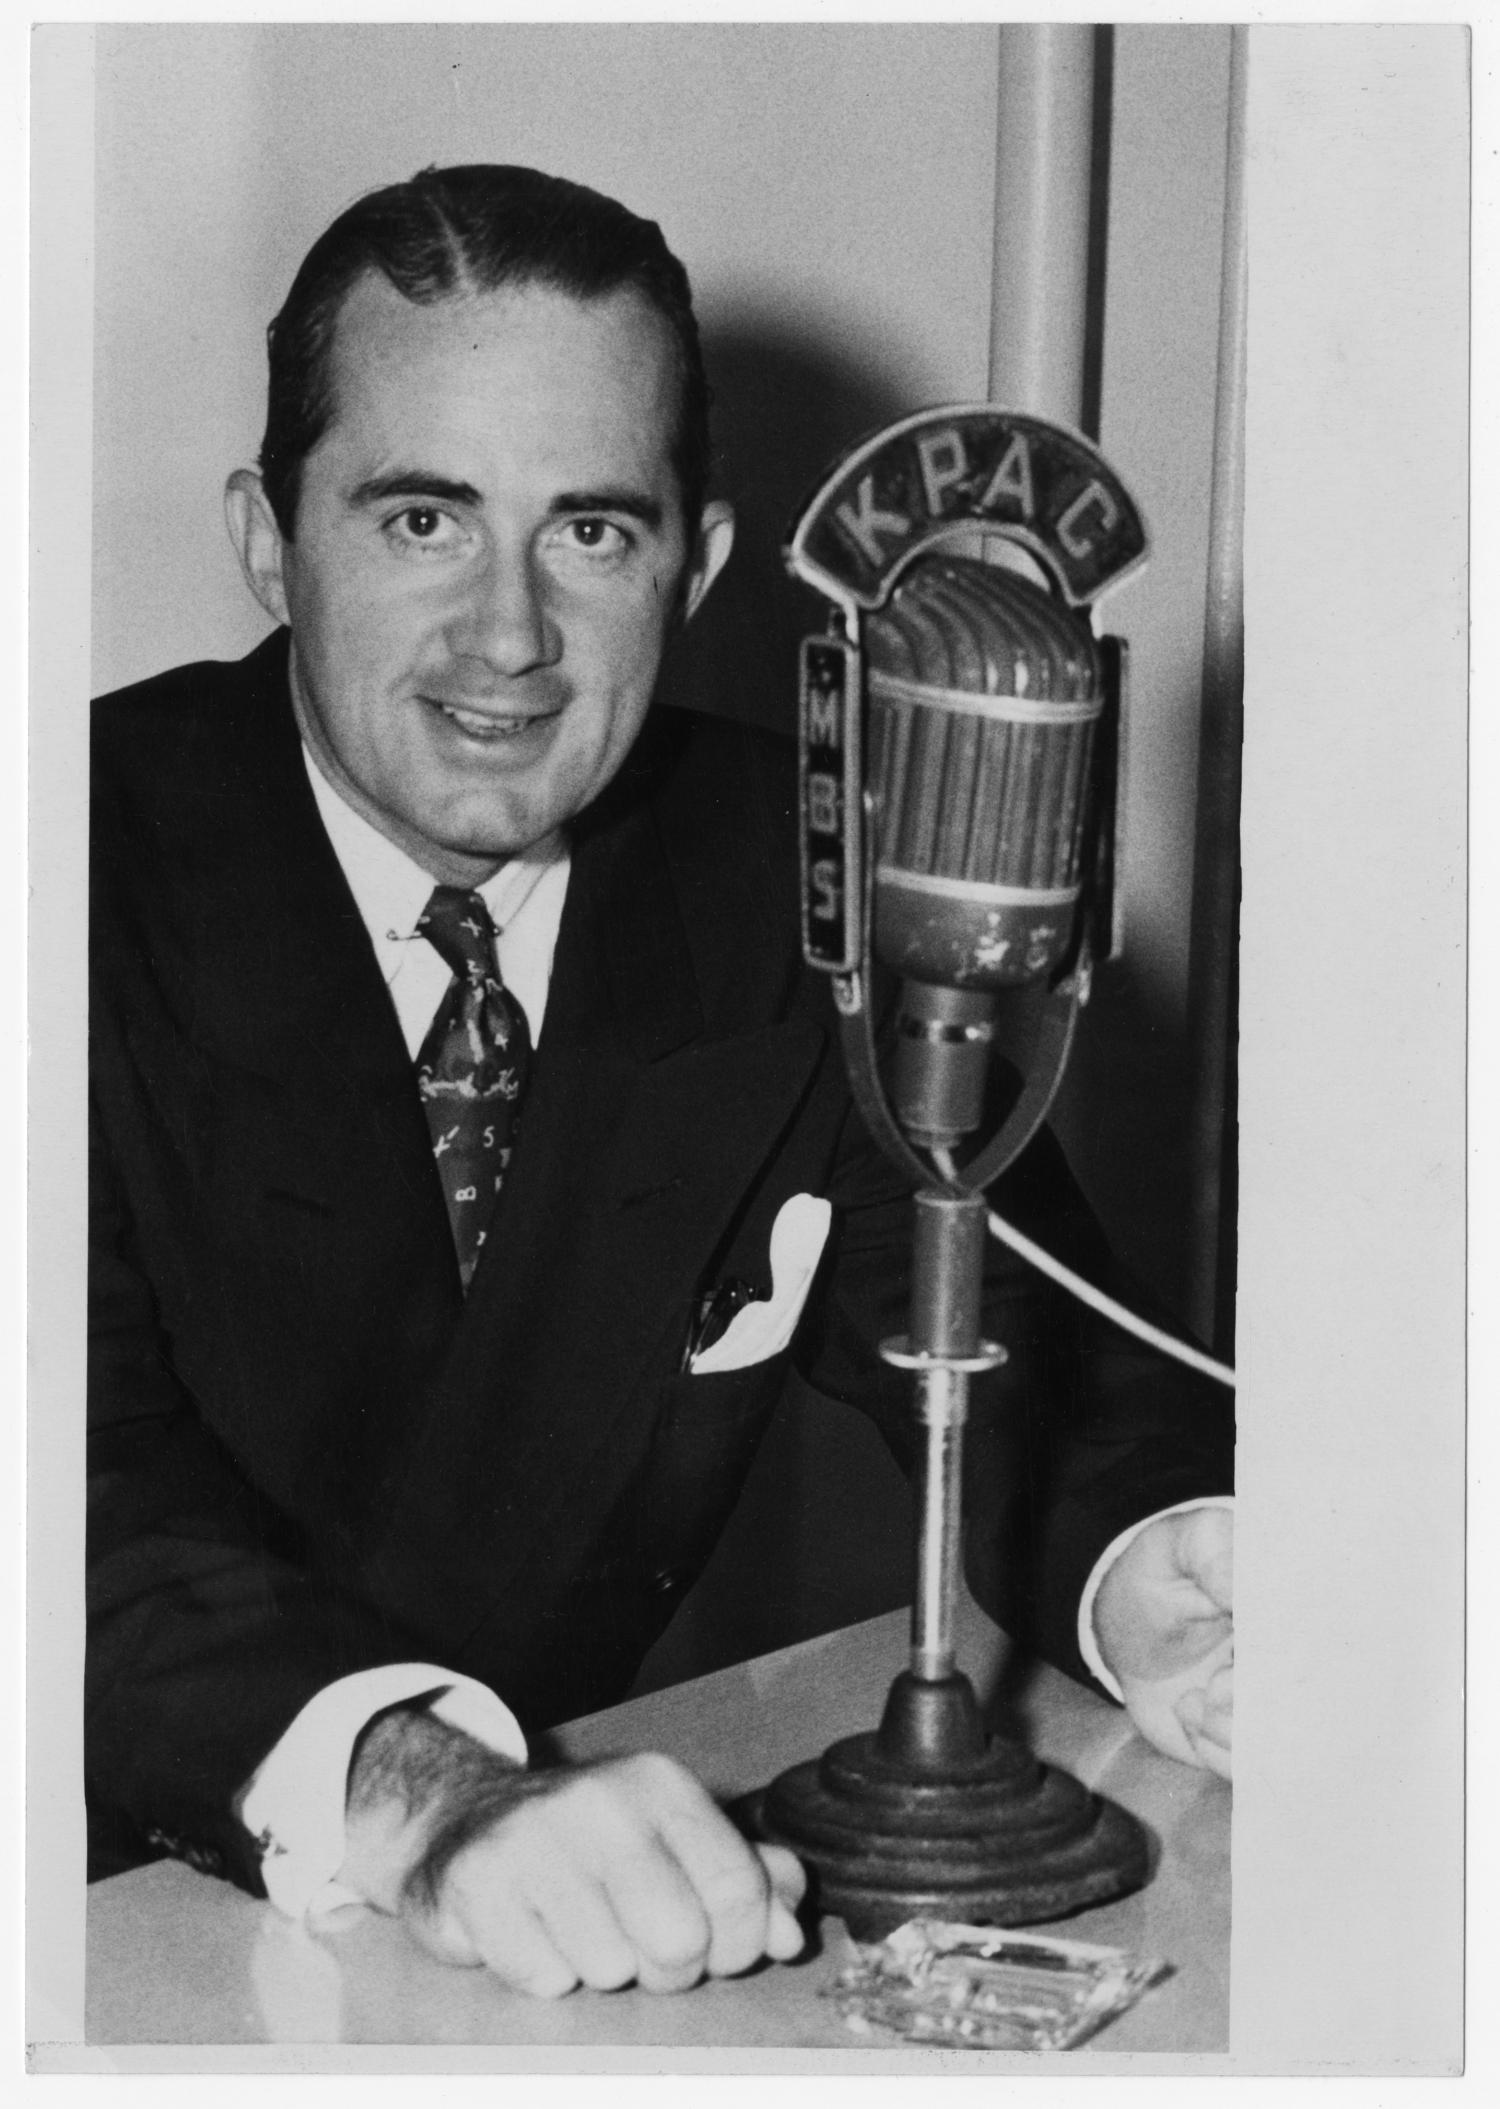 Gov. Allan Shivers broadcasts over KPAC Radio.